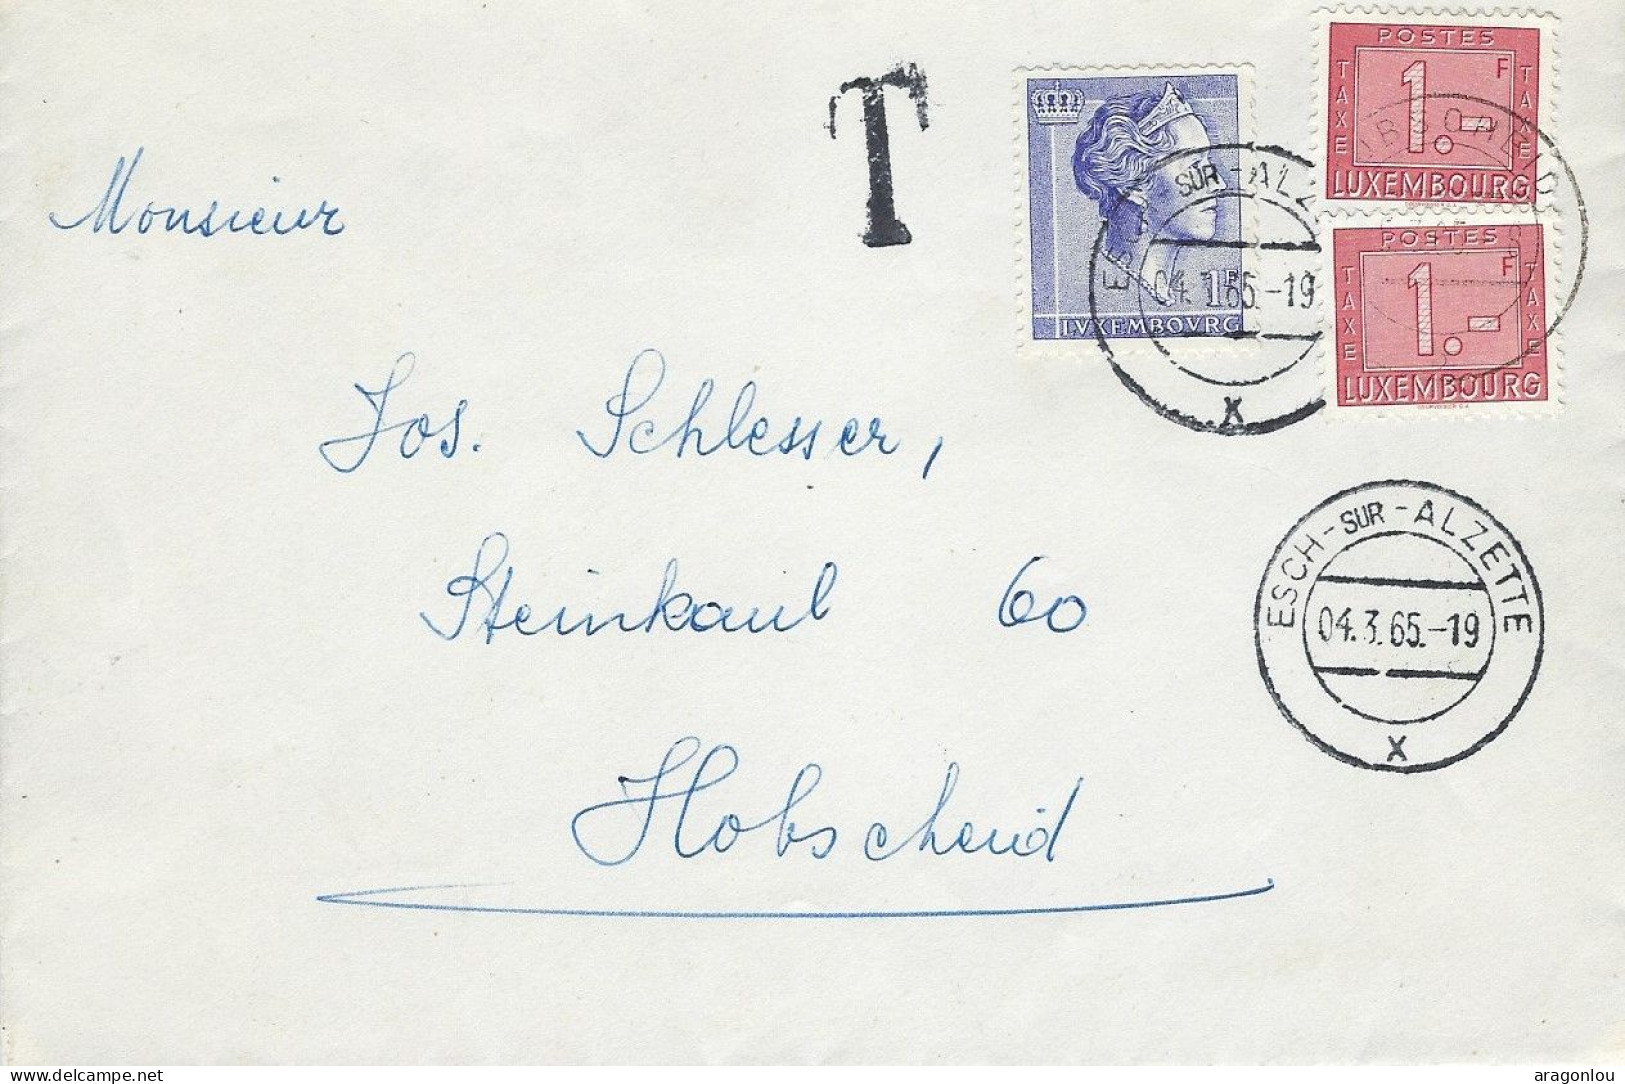 Luxembourg - Luxemburg - Lettre  Taxes  1965  Adressé à Monsieur Jos Schlesser , Hobscheid - Postage Due